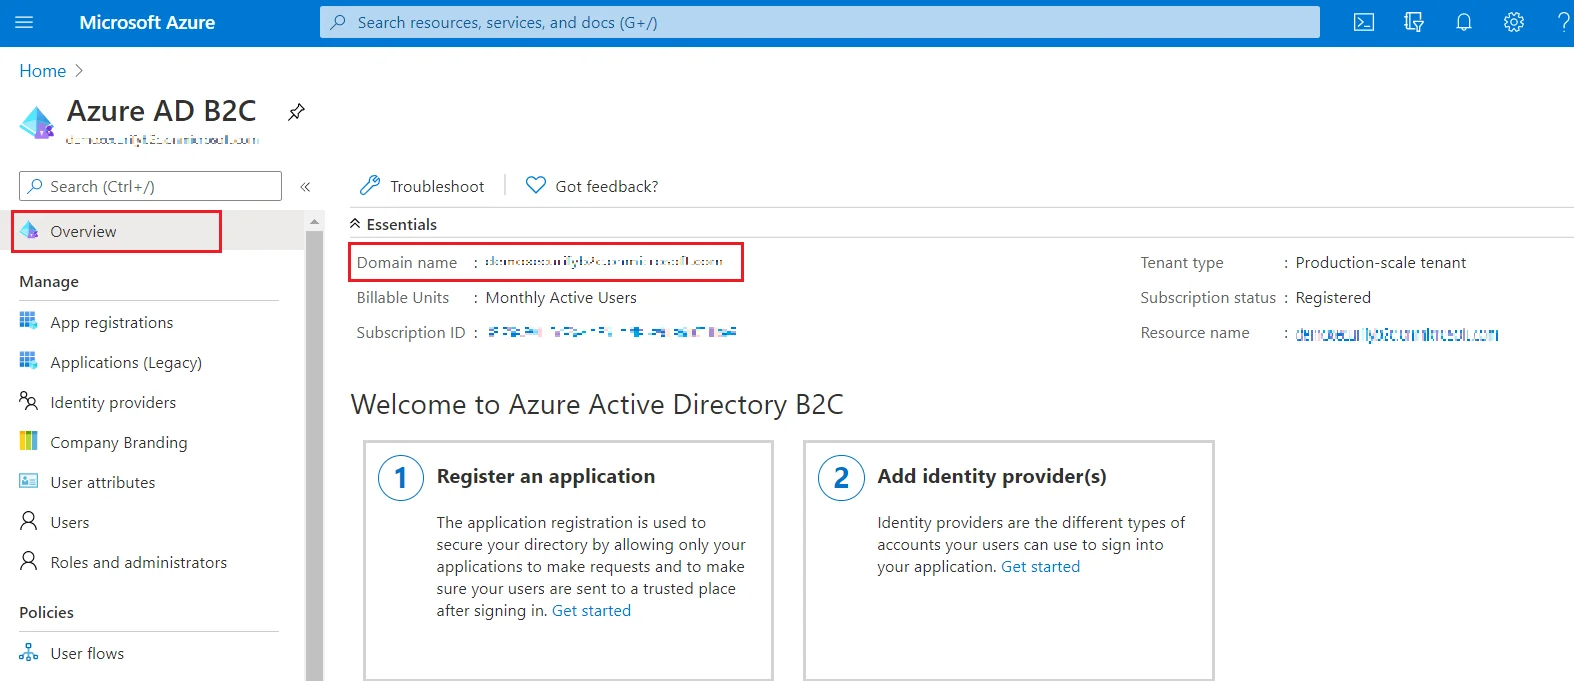 ASP.NET SAML Single Sign-On (SSO) using Azure B2C as IDP - B2C tenant ID Reco